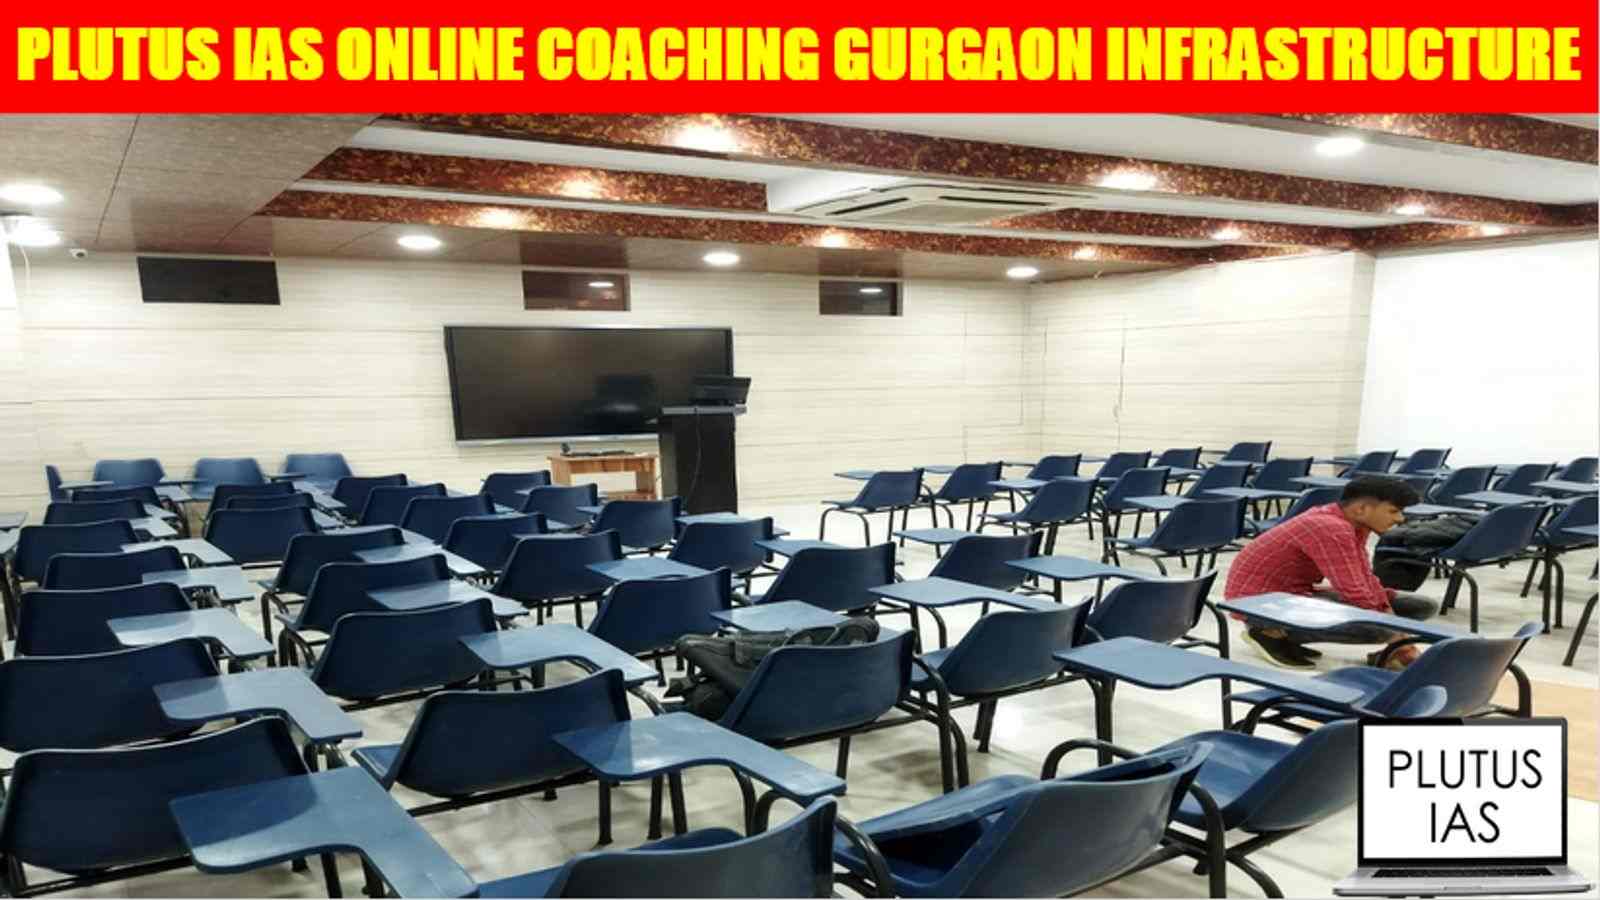 Plutus IAS Online Coaching Gurgaon Infrastructure